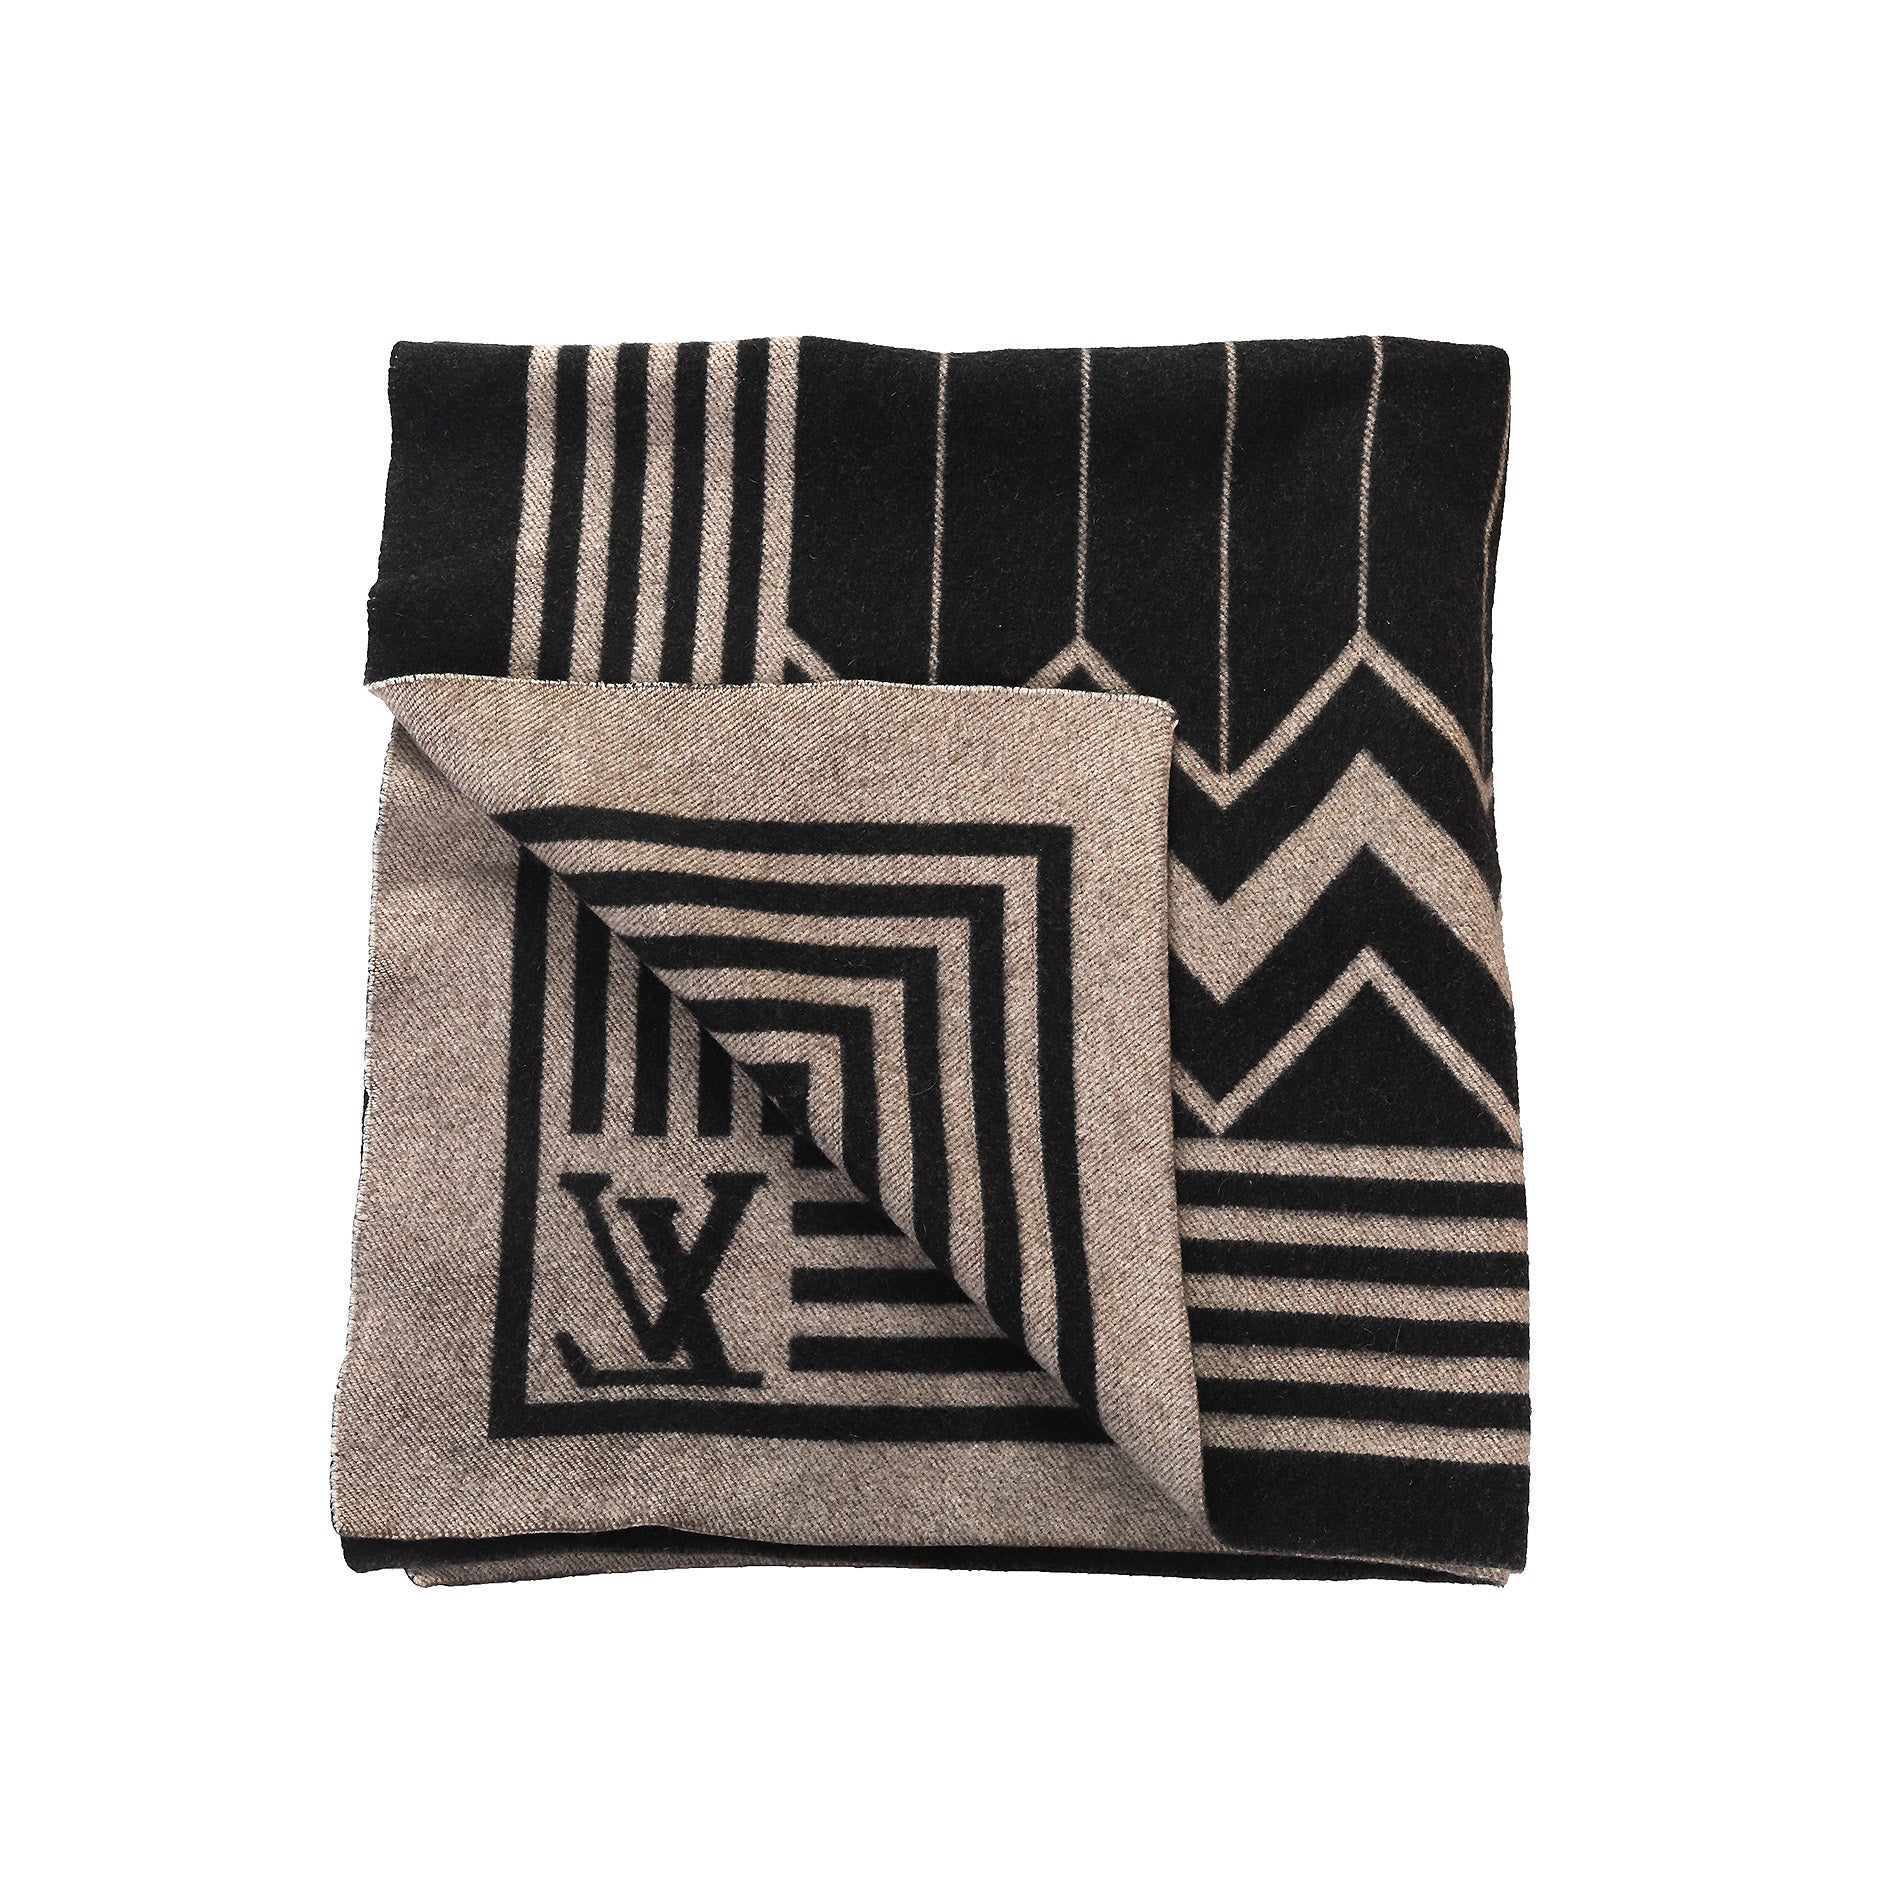 Louis Vuitton Karakoram Blanket Wool & Cashmere In Brown & Beige Tones